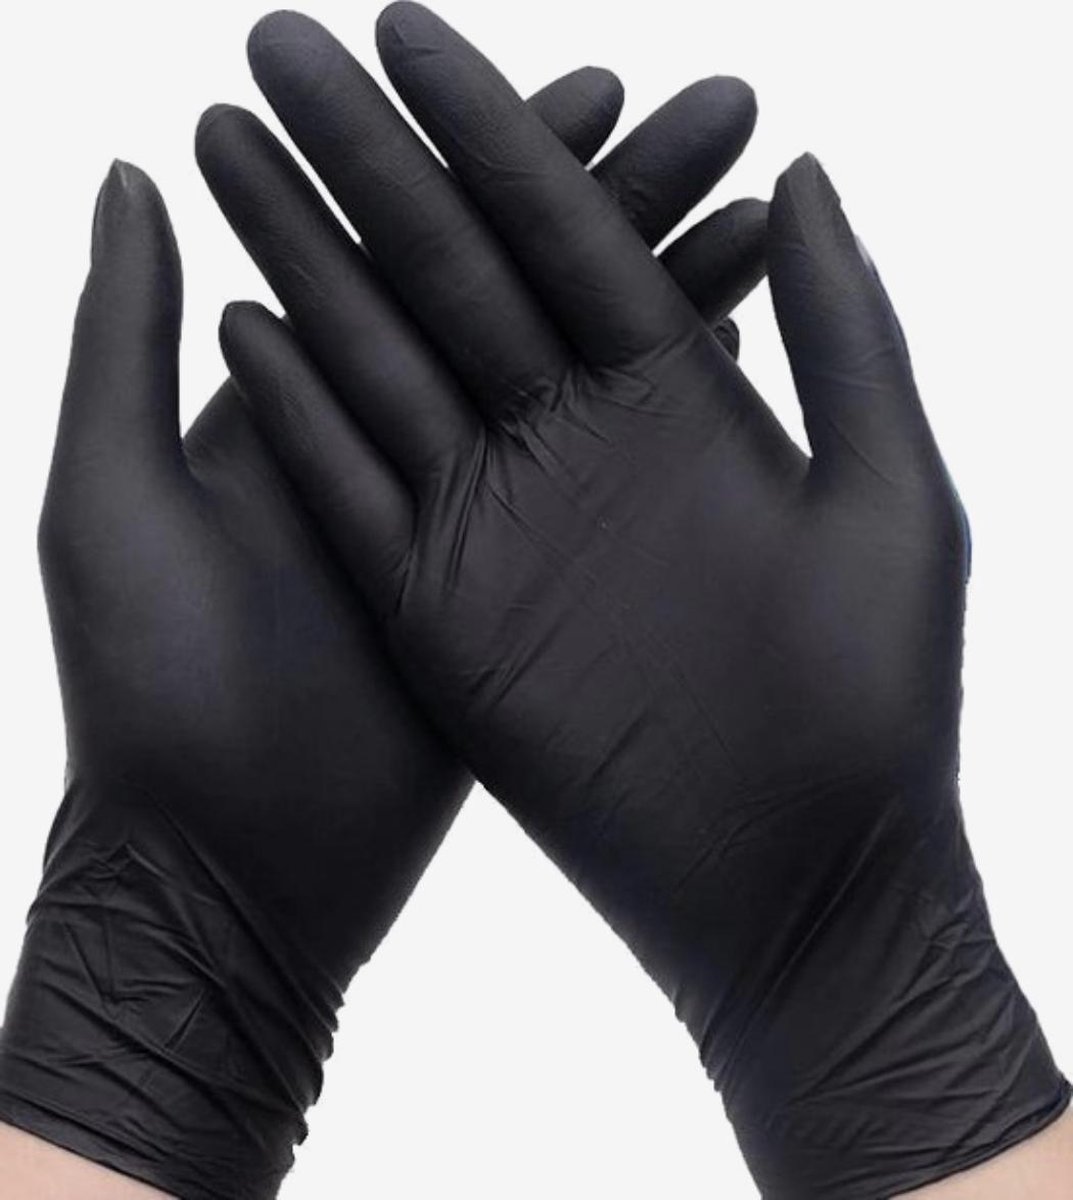 100x Wegwerp Handschoenen - Nitrile - Zwart - Powder Free - Latex free - Maat M - Merkloos